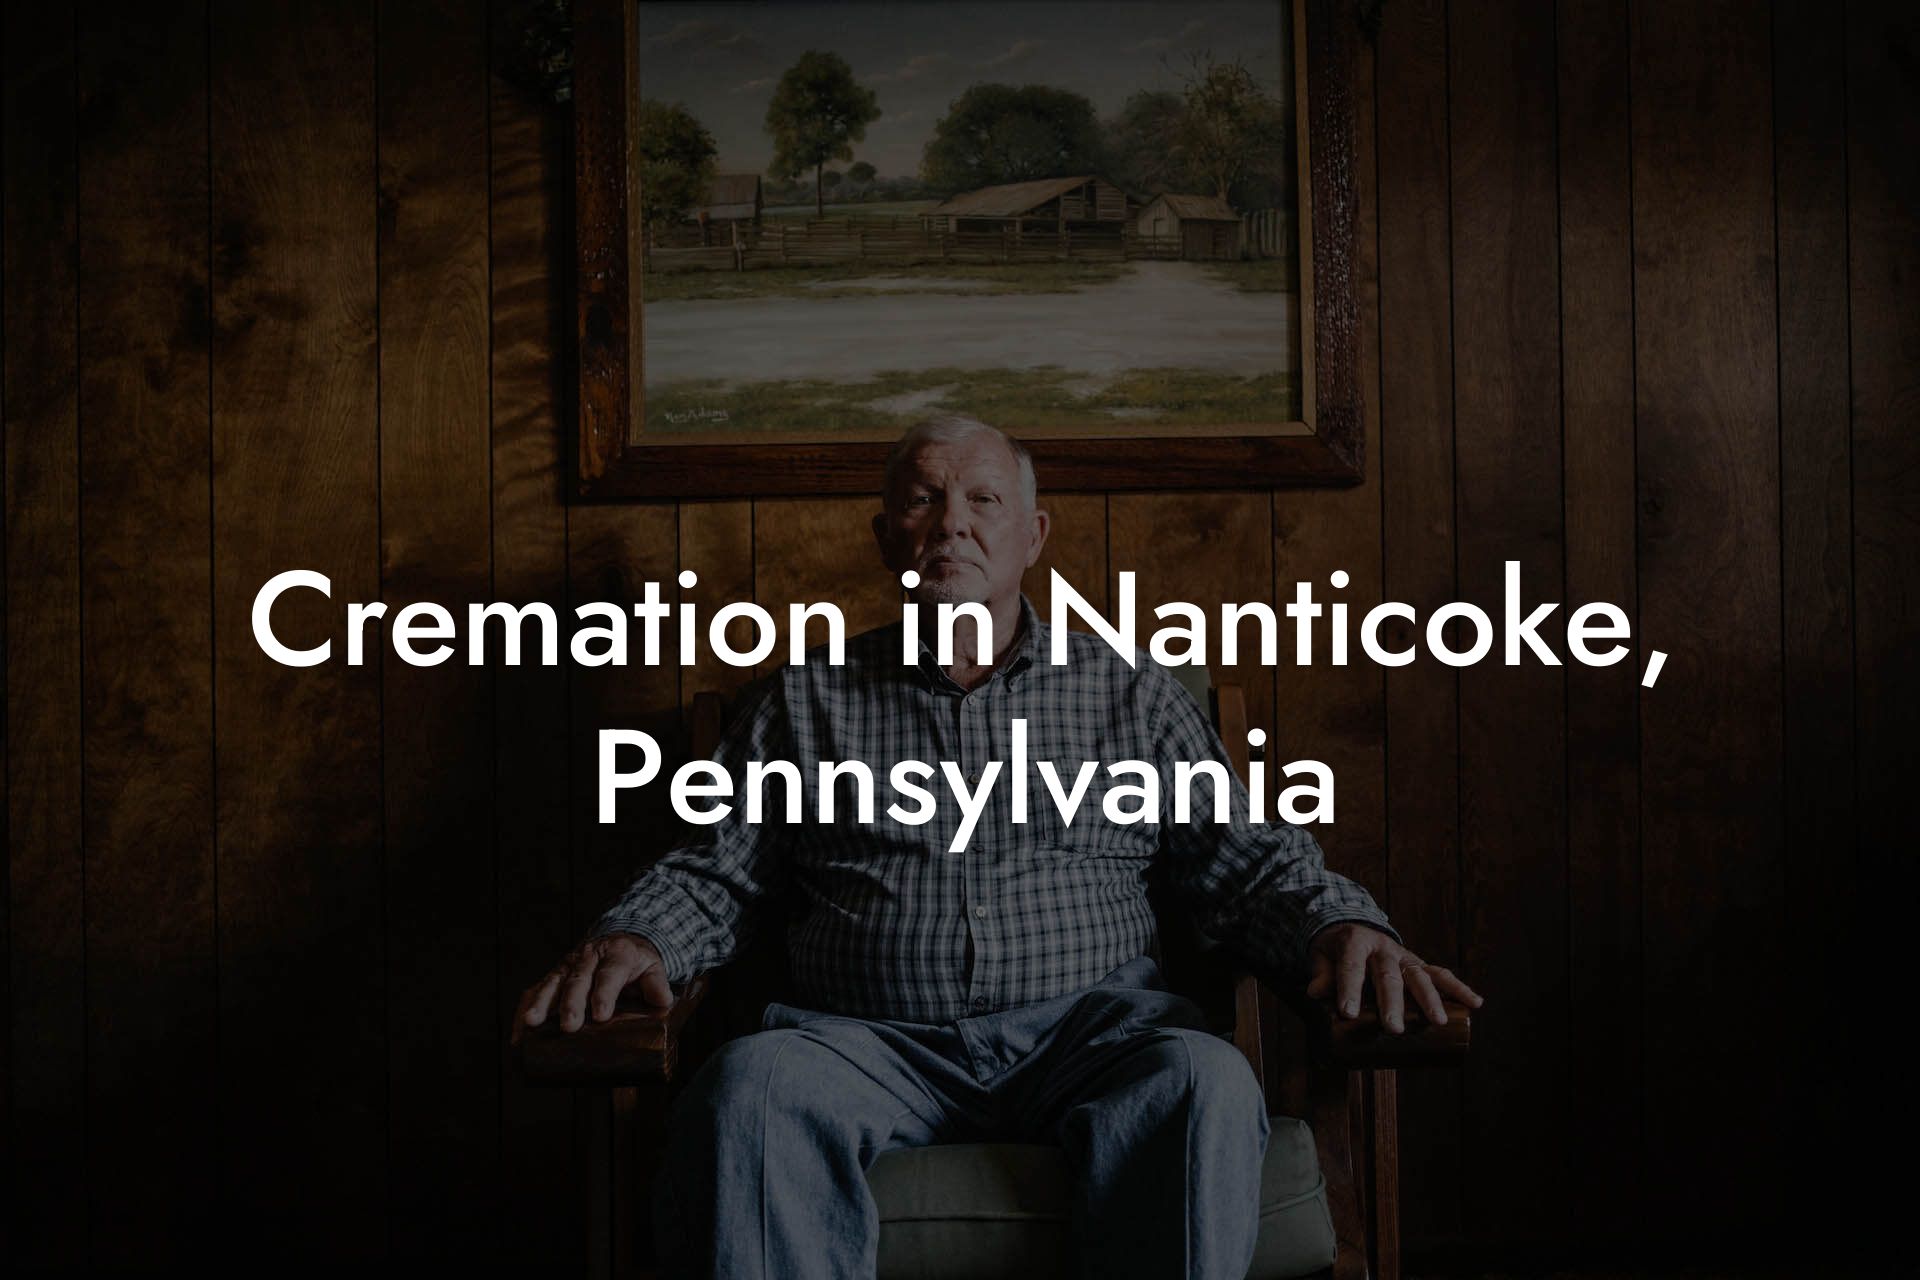 Cremation in Nanticoke, Pennsylvania